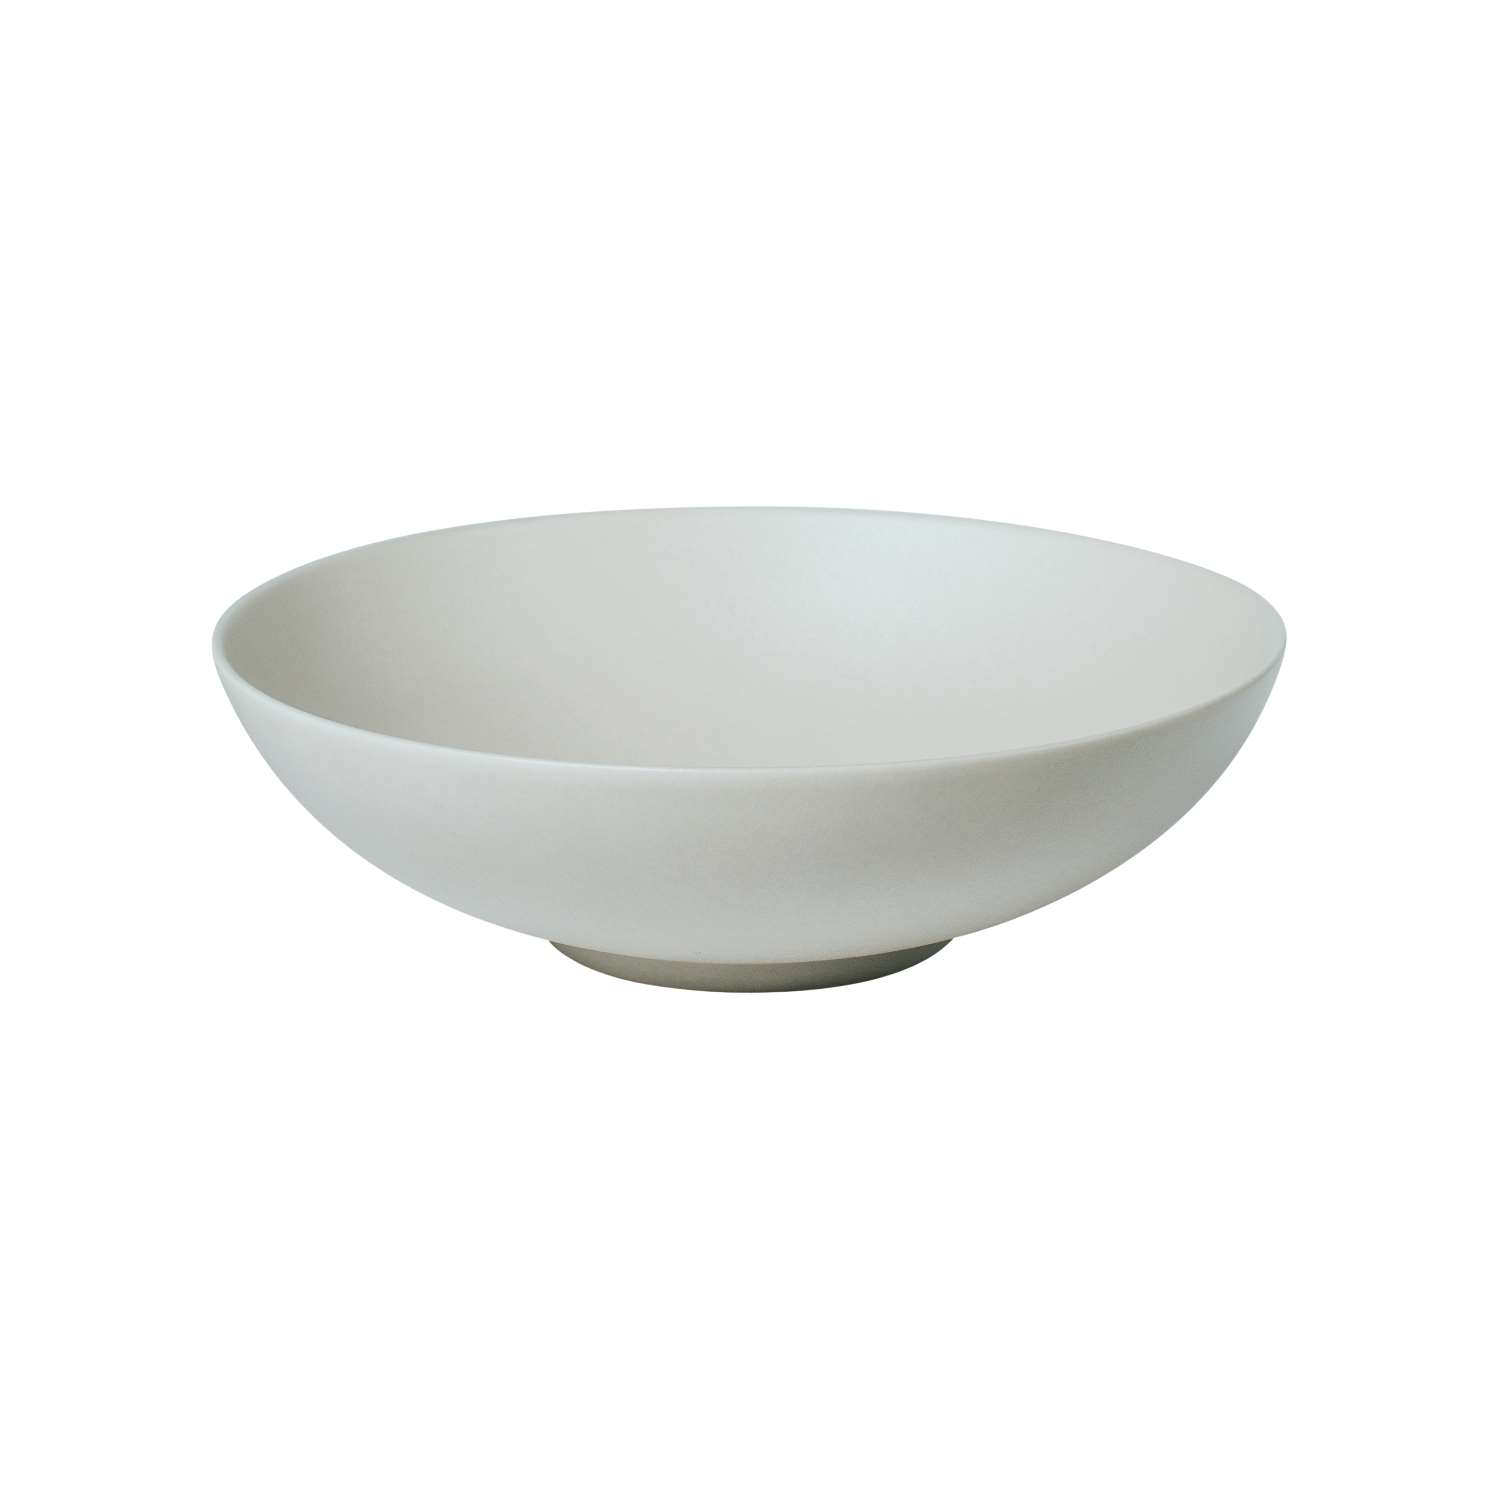 Baralee Light Grey Low Bowl